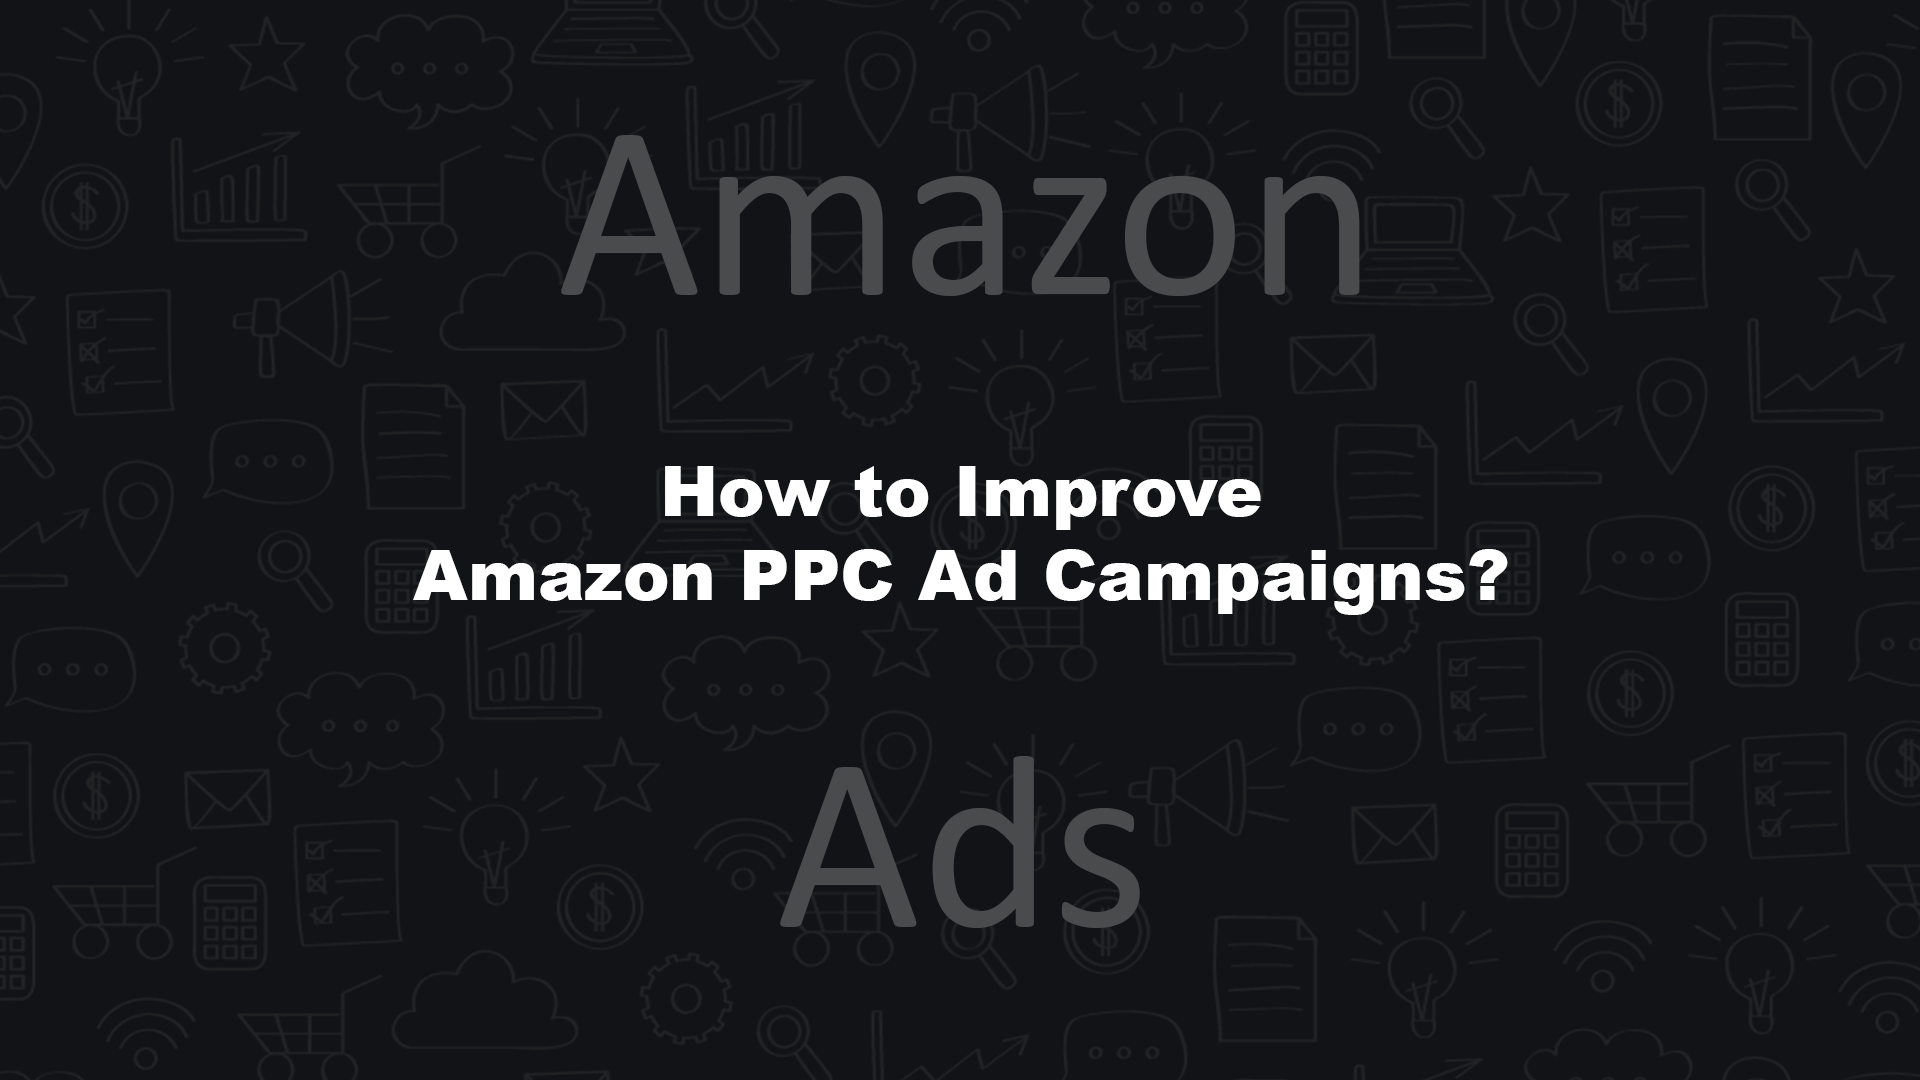 Tips to Improve Amazon PPC Ad Campaigns